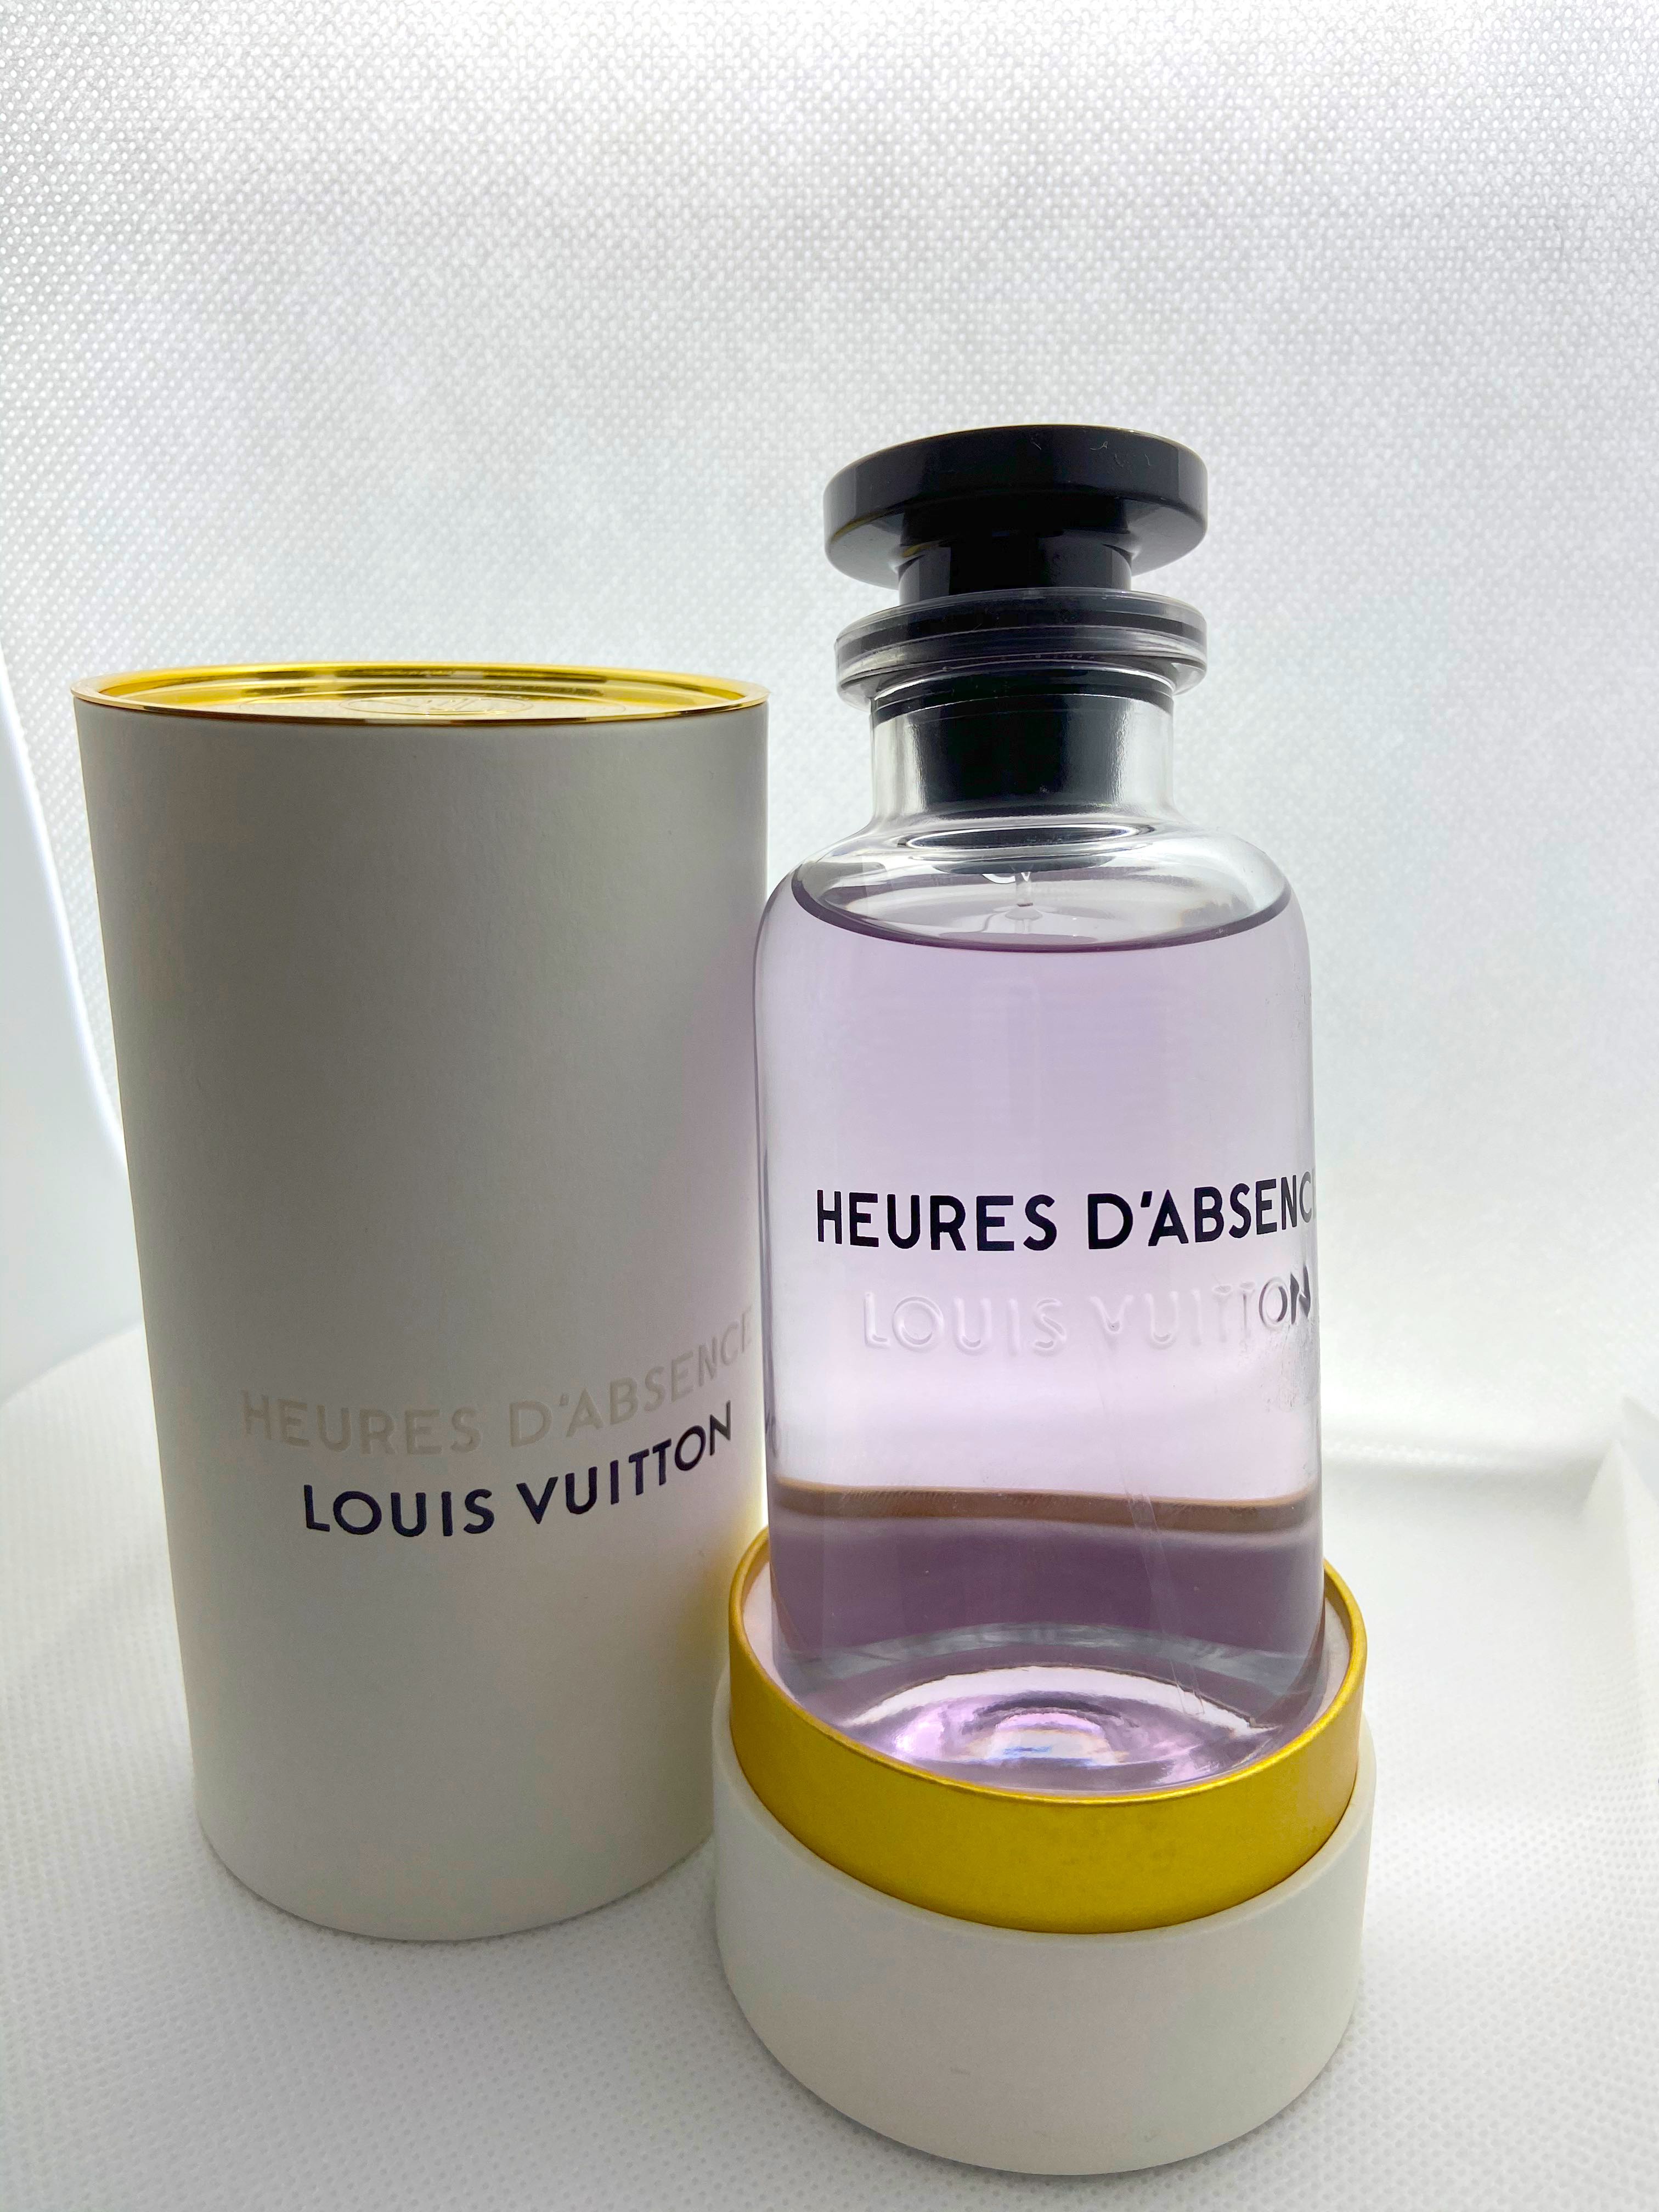 Heures d'Absence  Louis vuitton perfume, Perfume, Louis vuitton fragrance